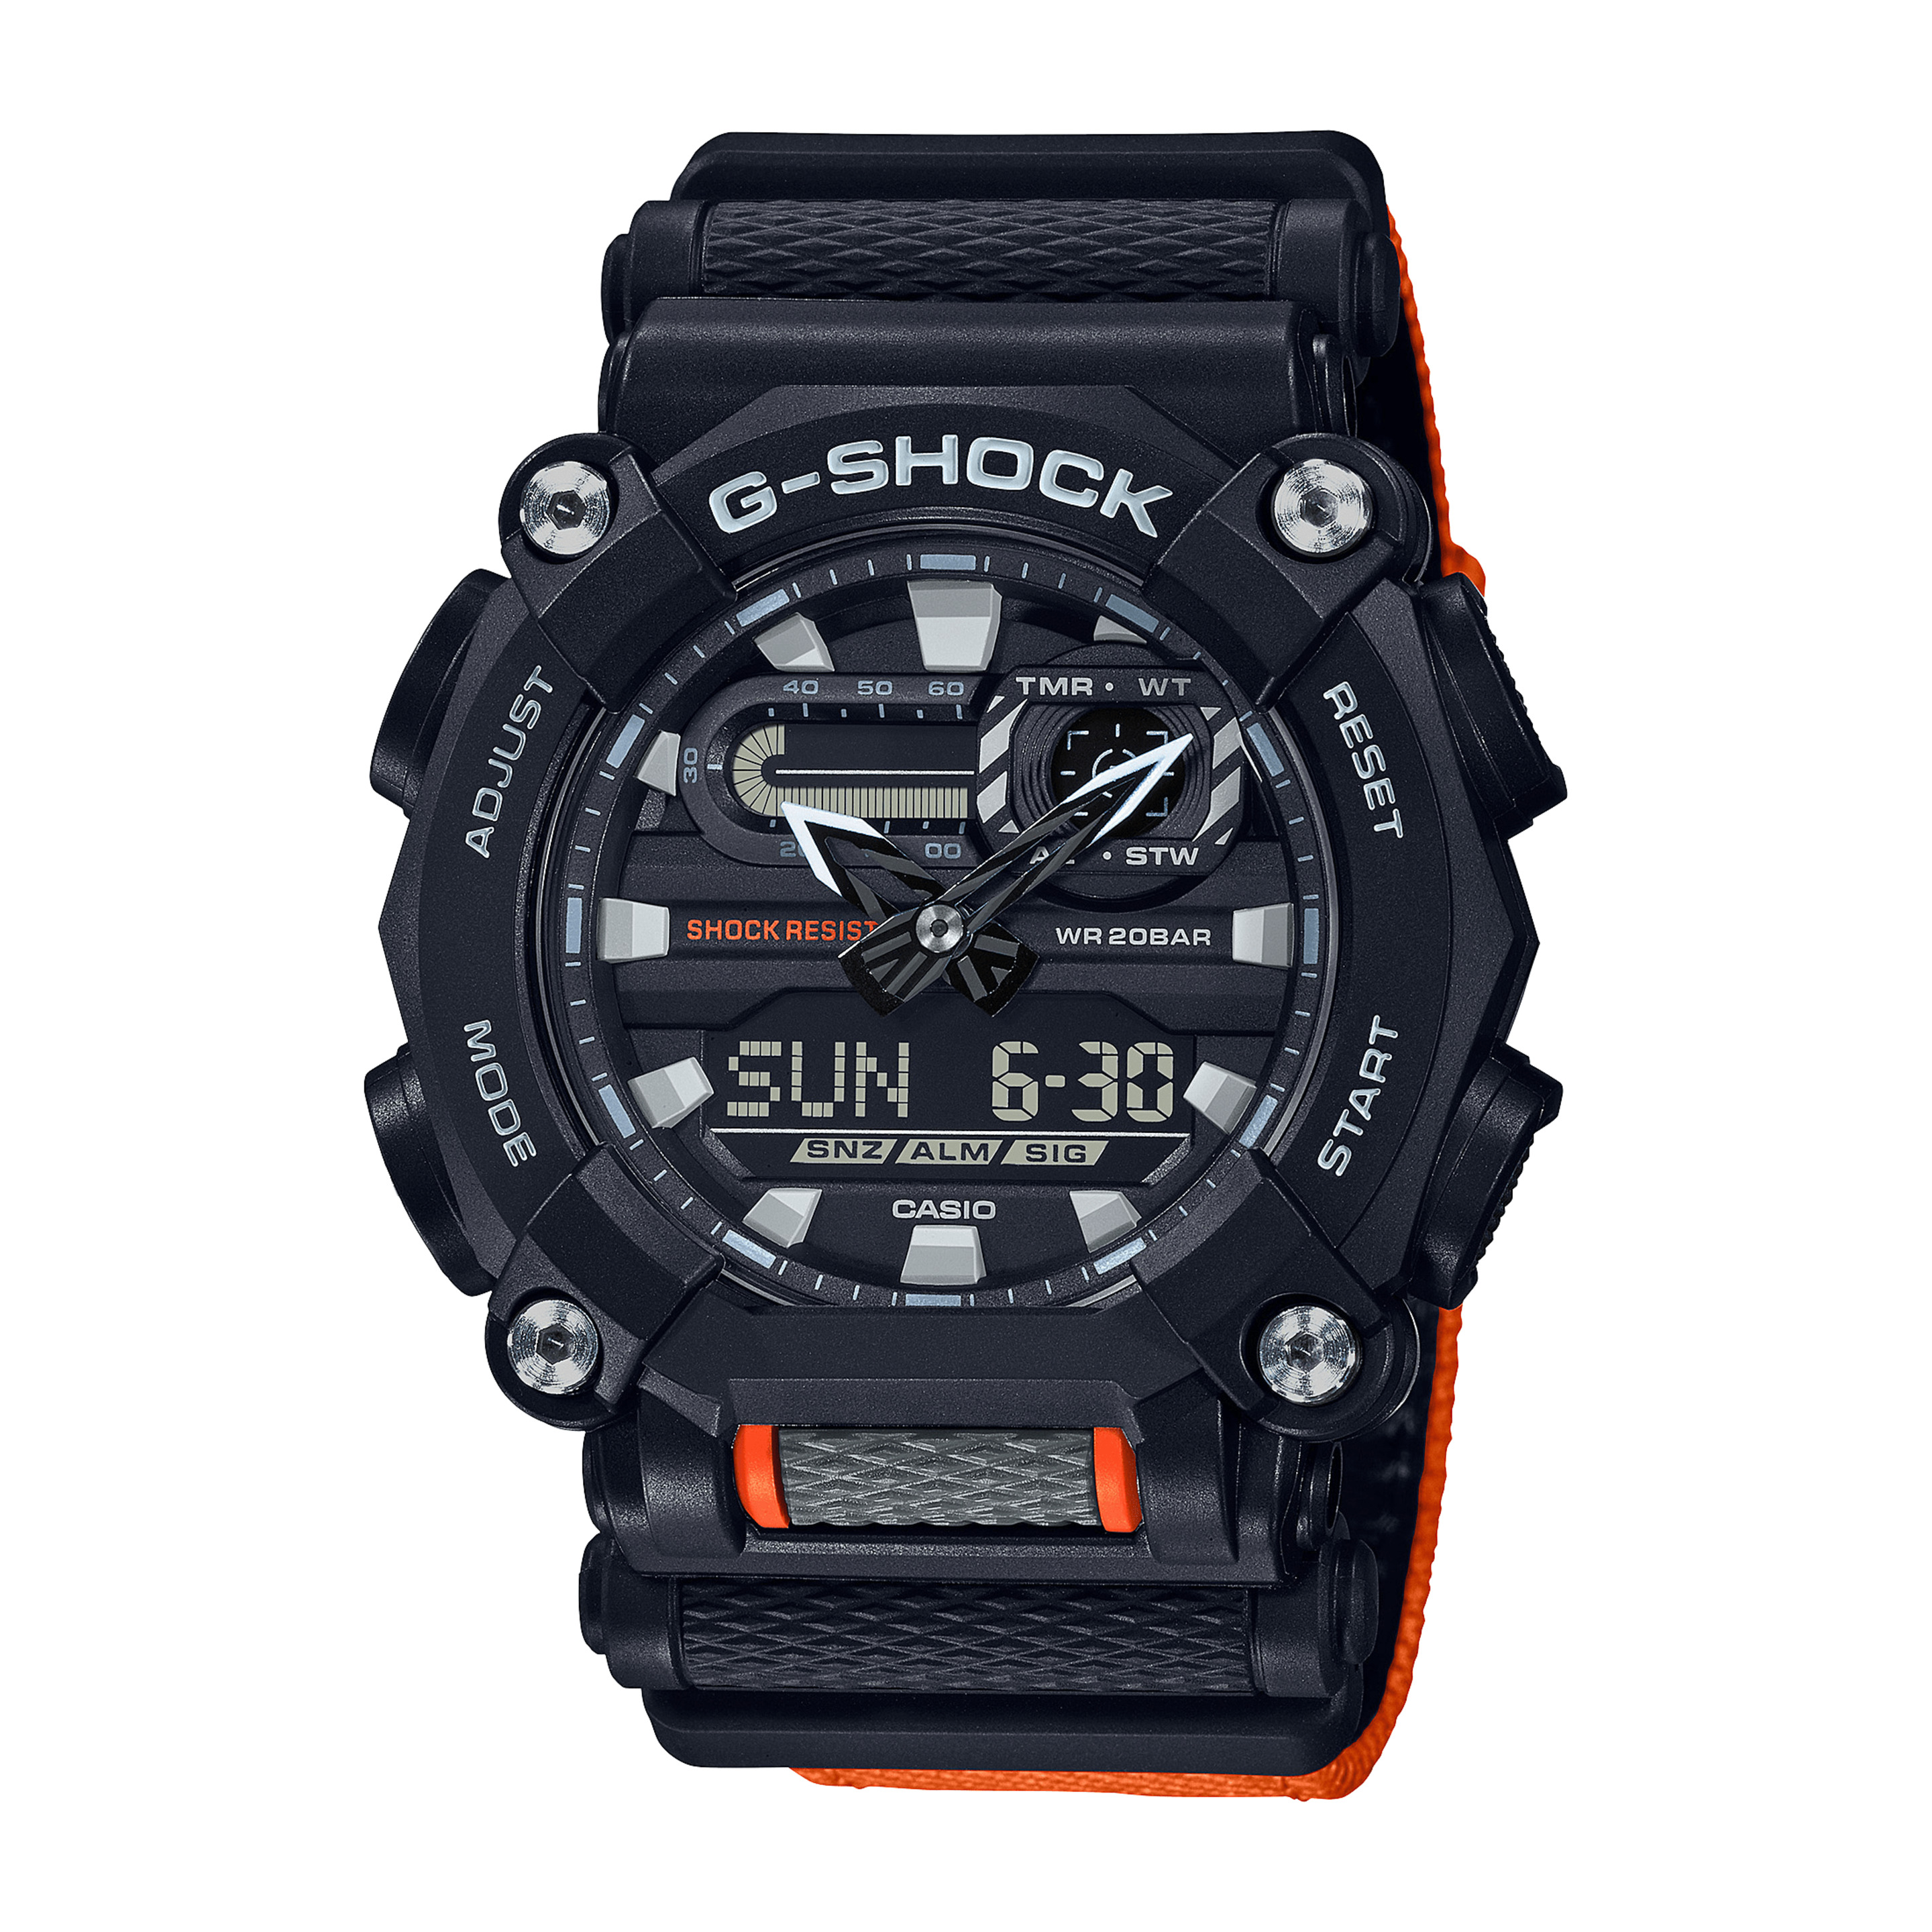 Reloj G-shock Ga-900c-1a4er - negro_naranja - G-shock Classic  MKP